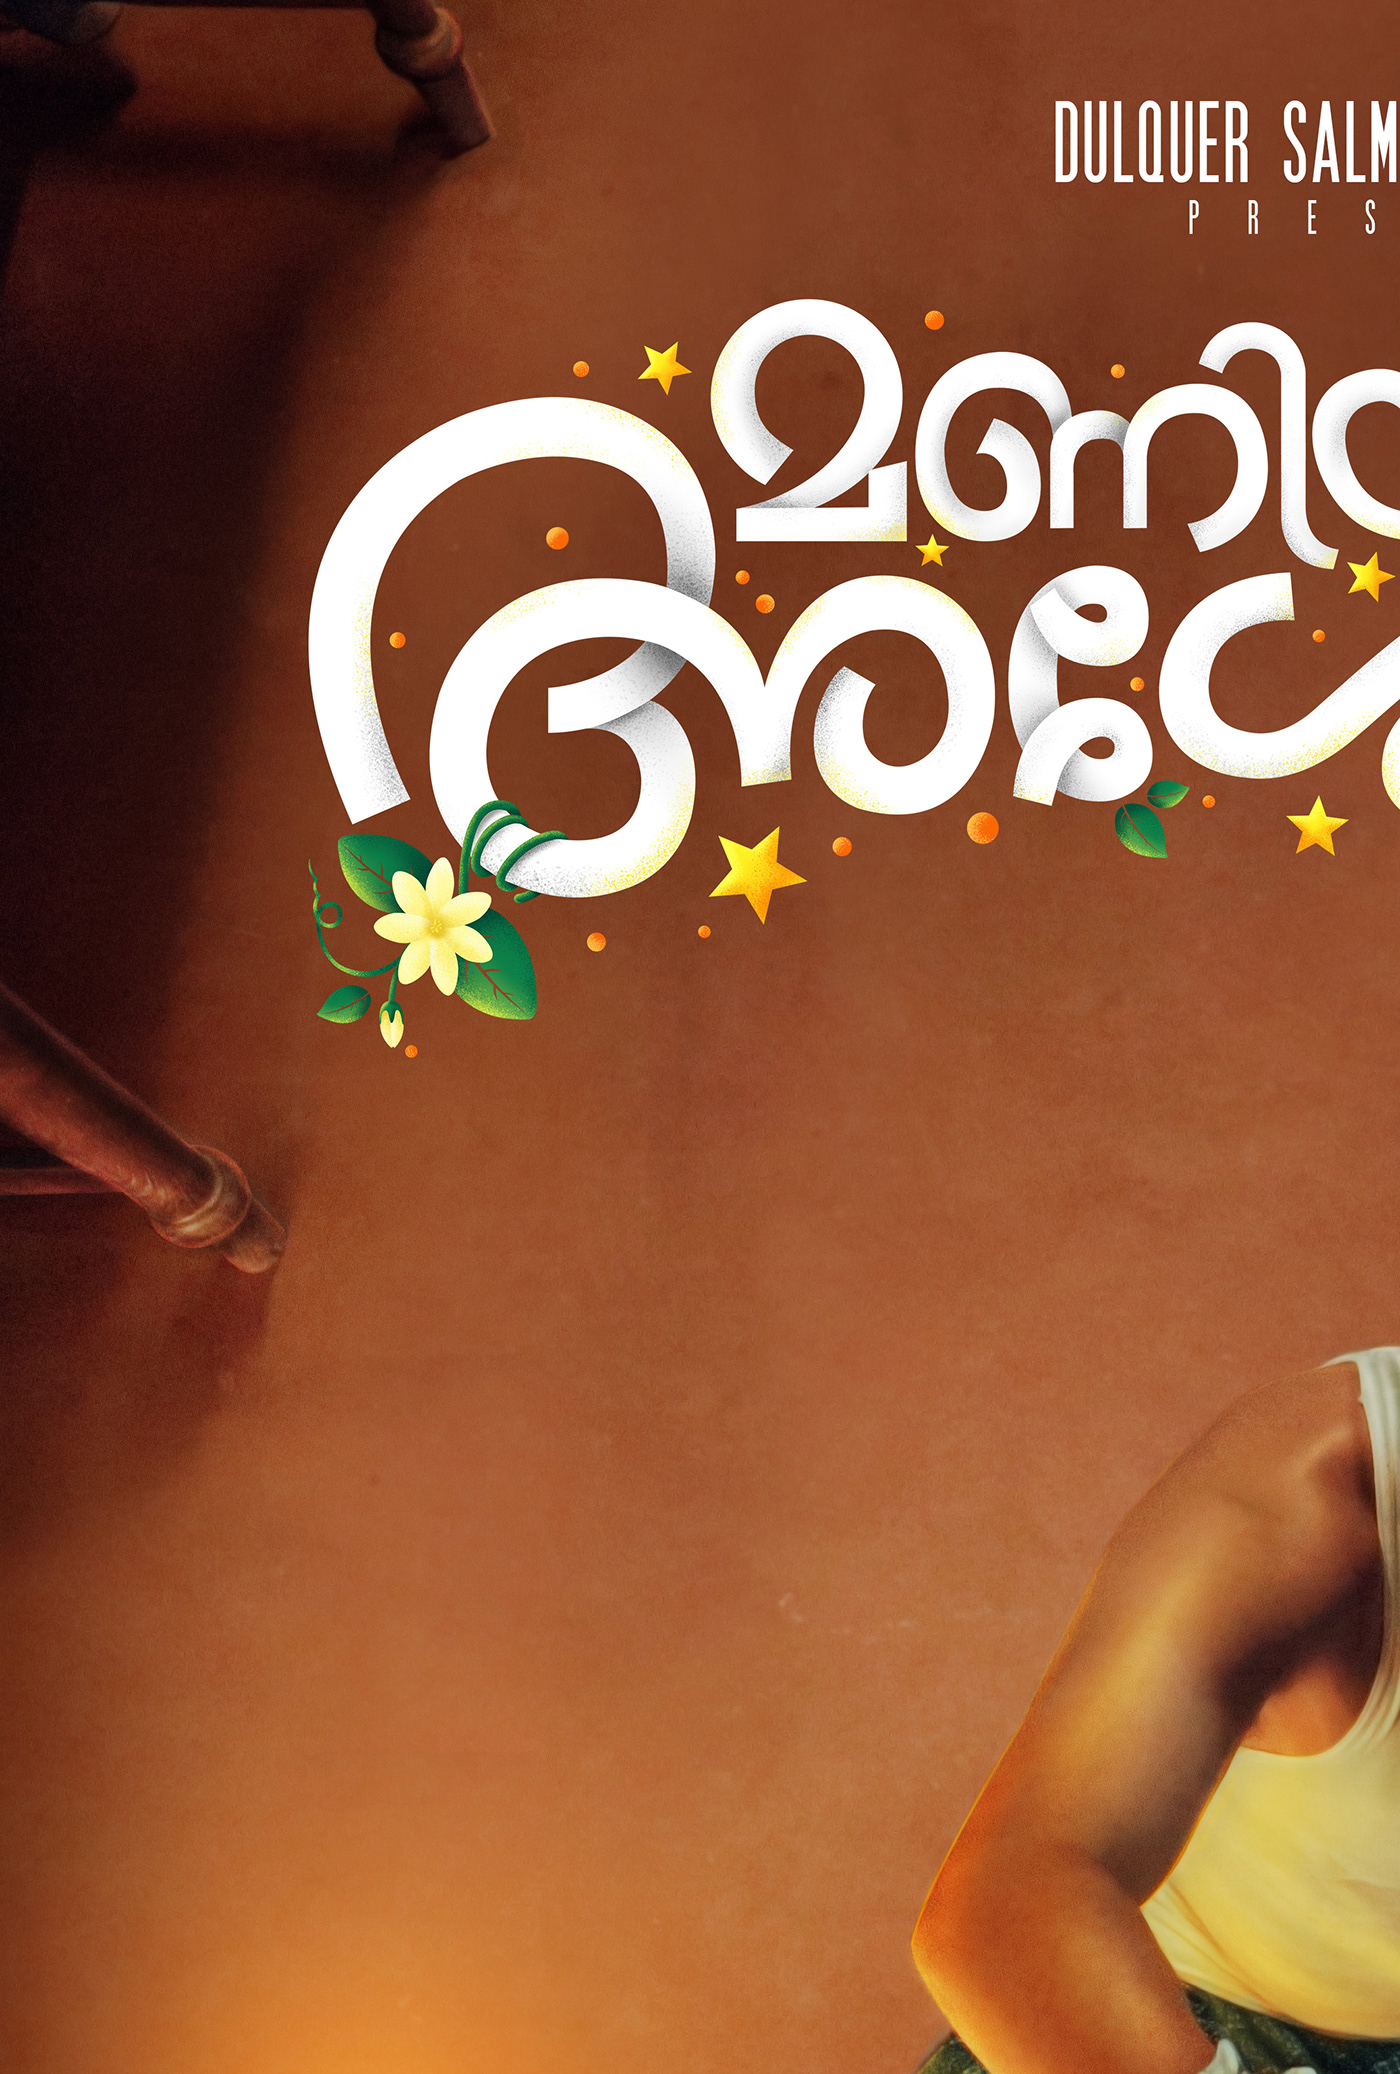 Anupama Dulquer Salmaan Film   gregory key art malayalam maniyarayile ashokan movie Netflix Poster Design